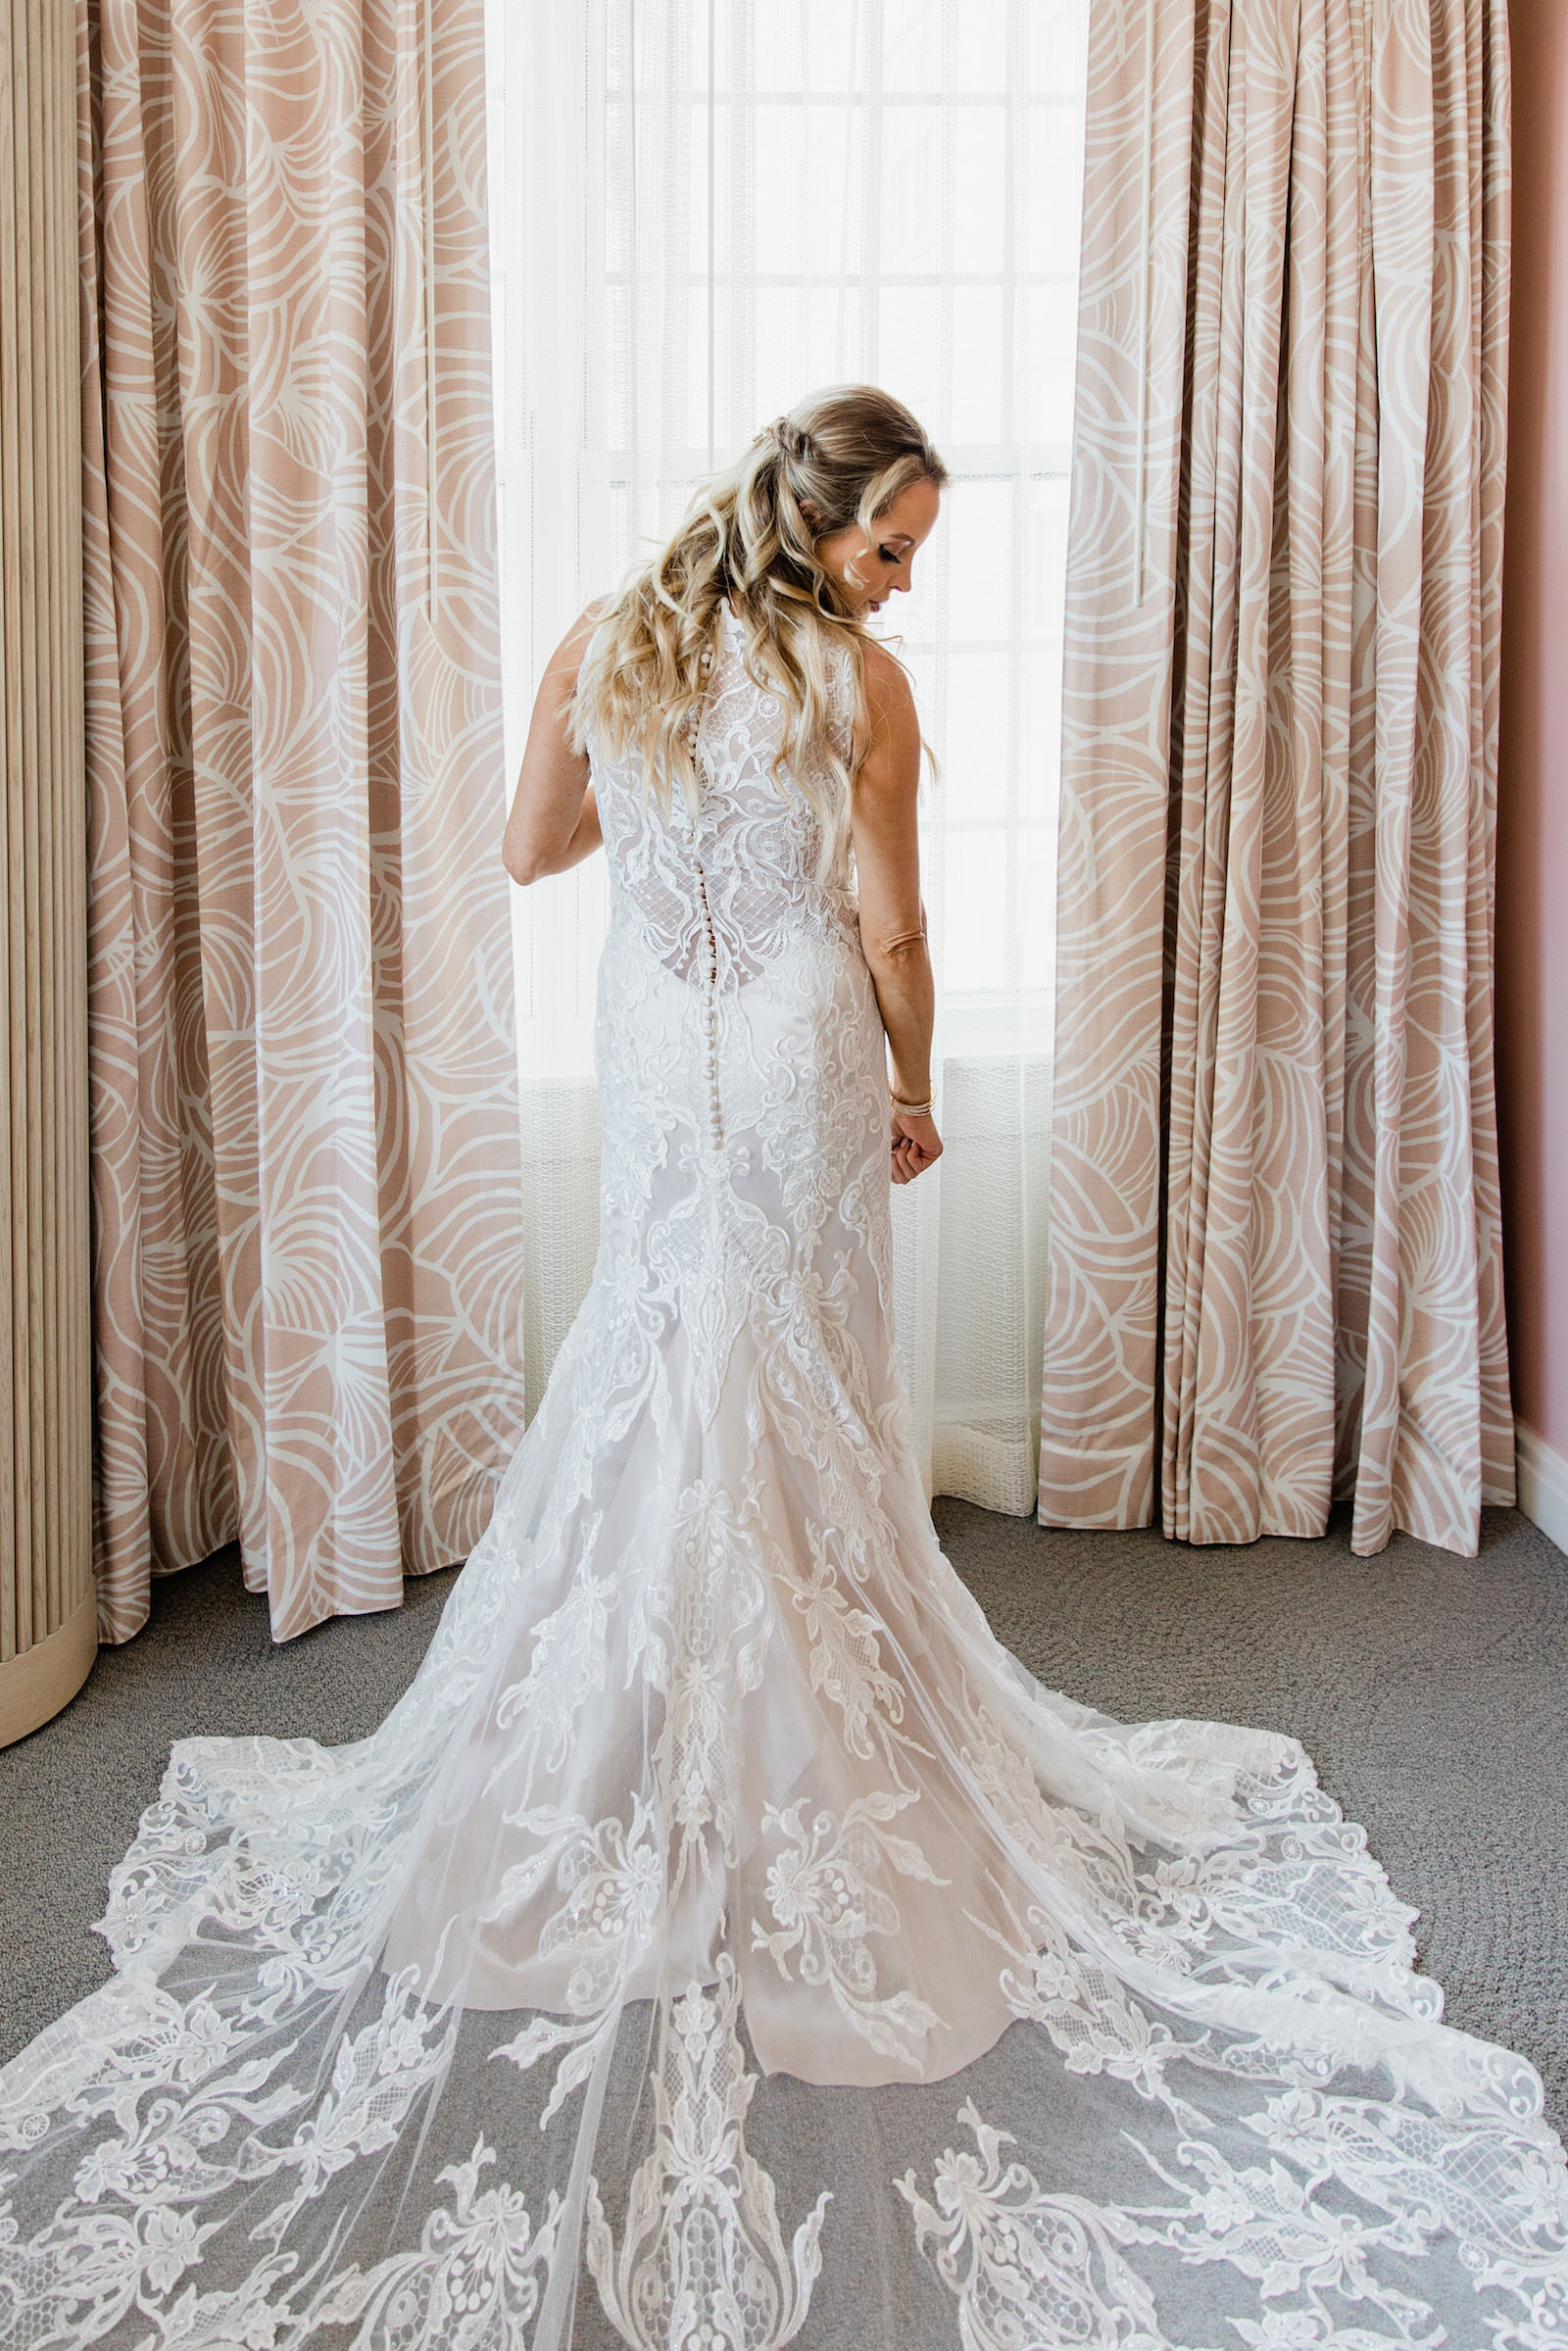 Florida Bride Wearing Lace and Illusion Elegant Wedding Dress | Tampa Bay Wedding Hair and Makeup Michele Renee the Studio